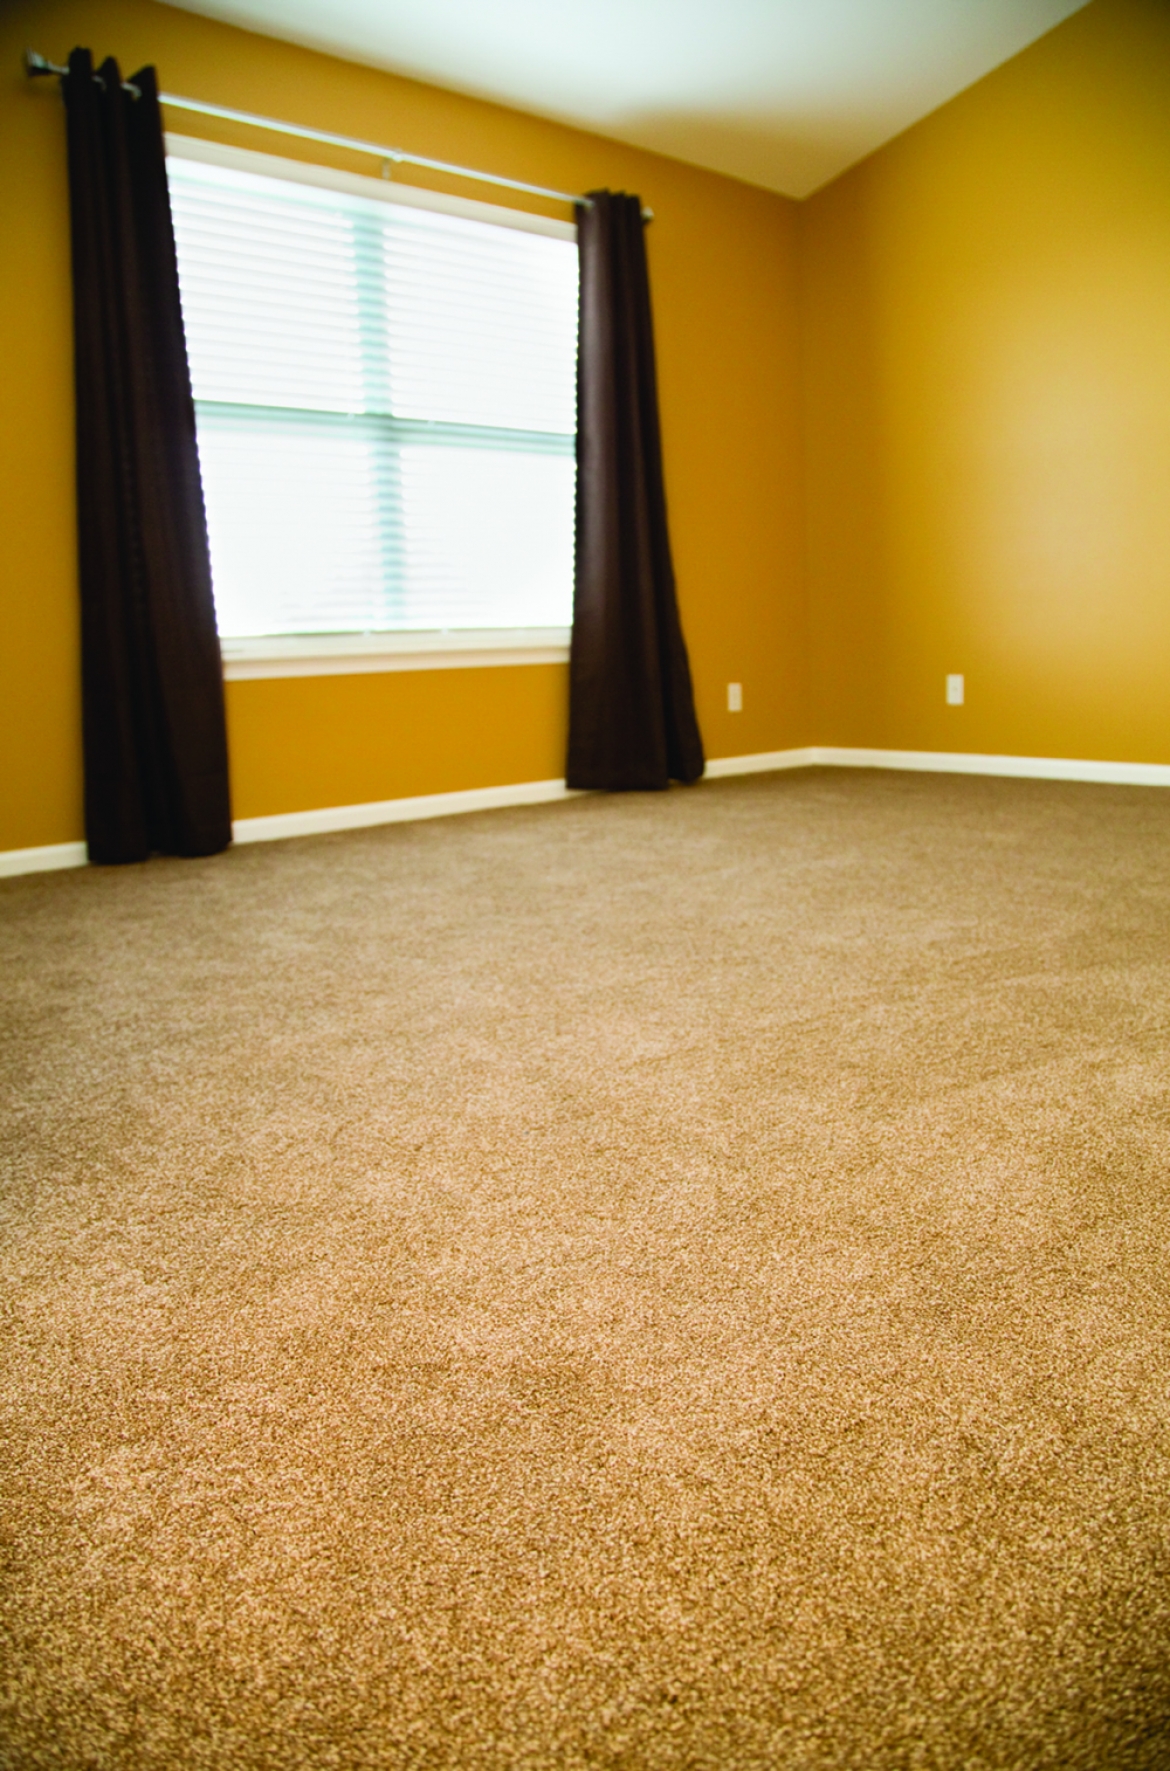 Carpet Flooring, American Flooring